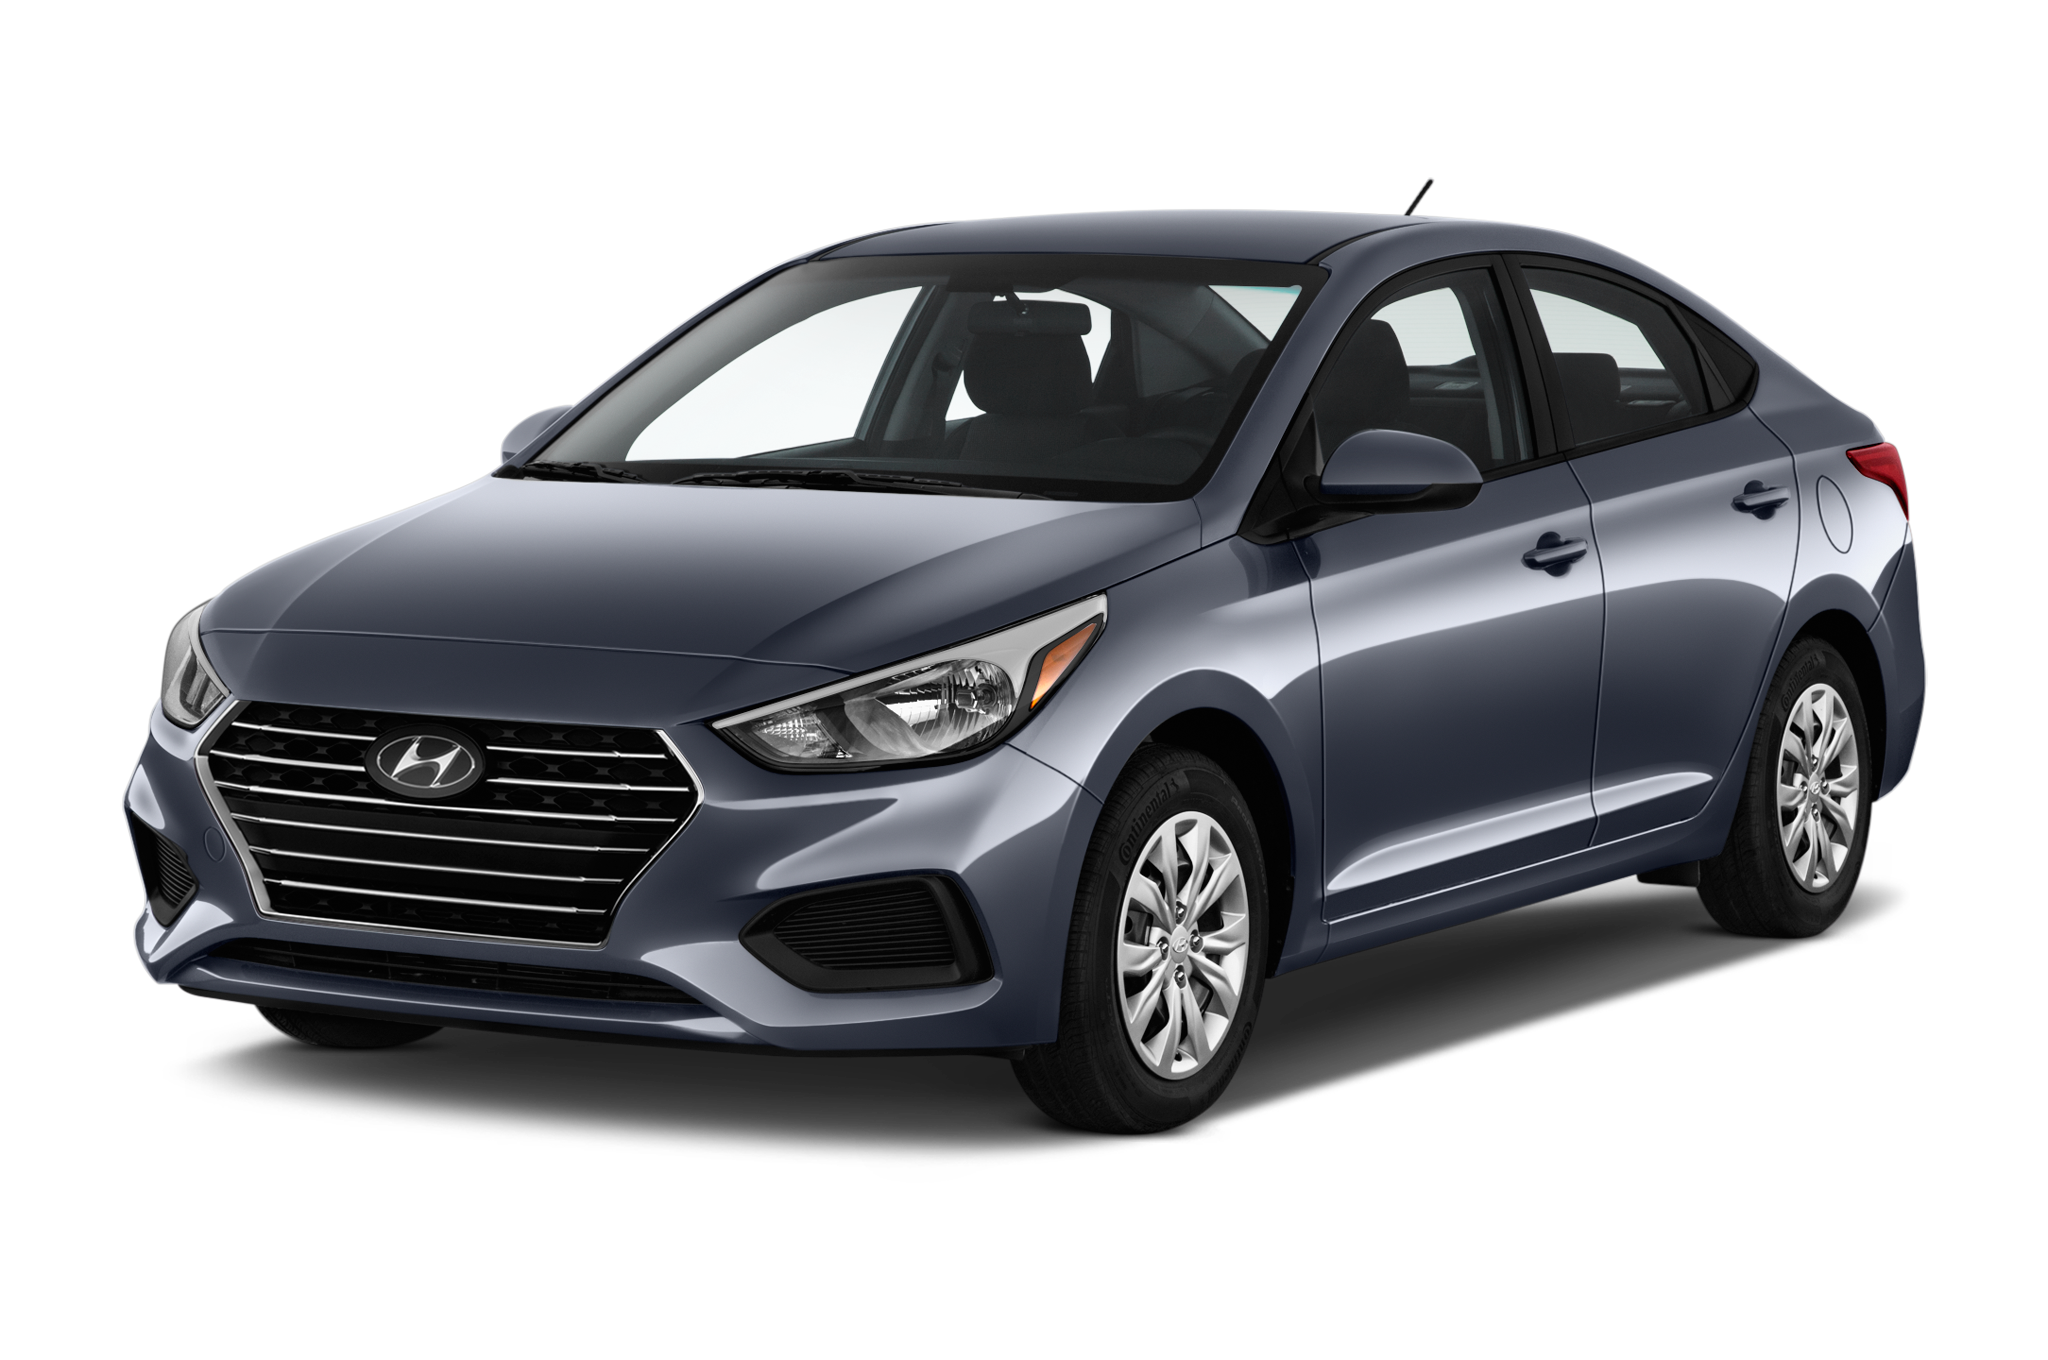 2020 Hyundai Accent Overview - MSN Autos